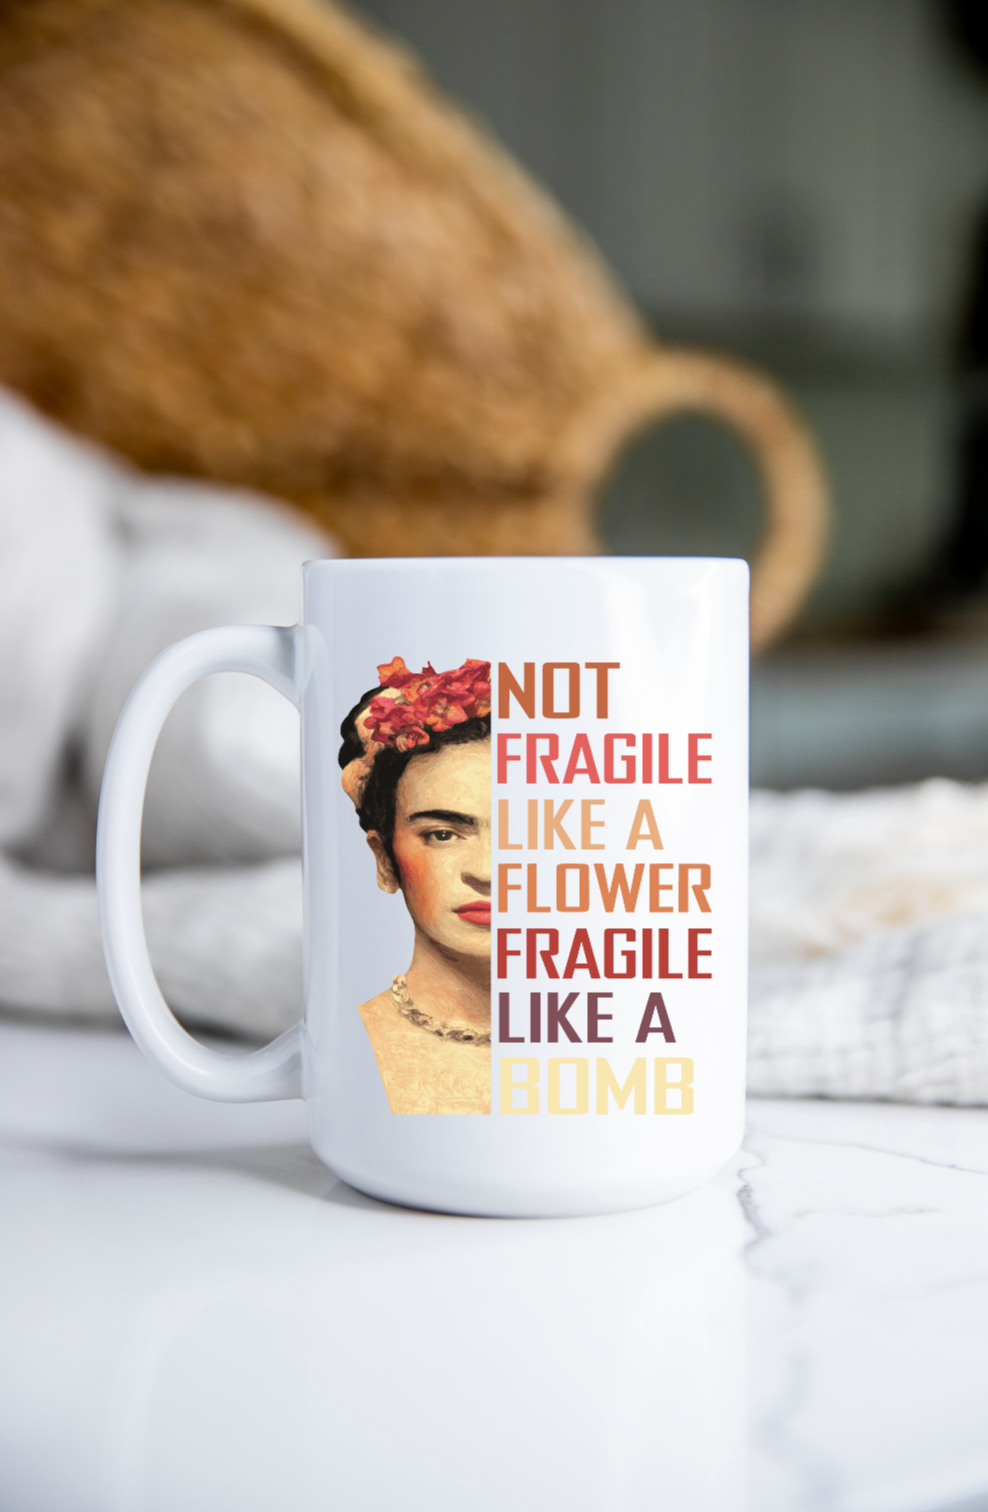 Fragile like a bomb mug